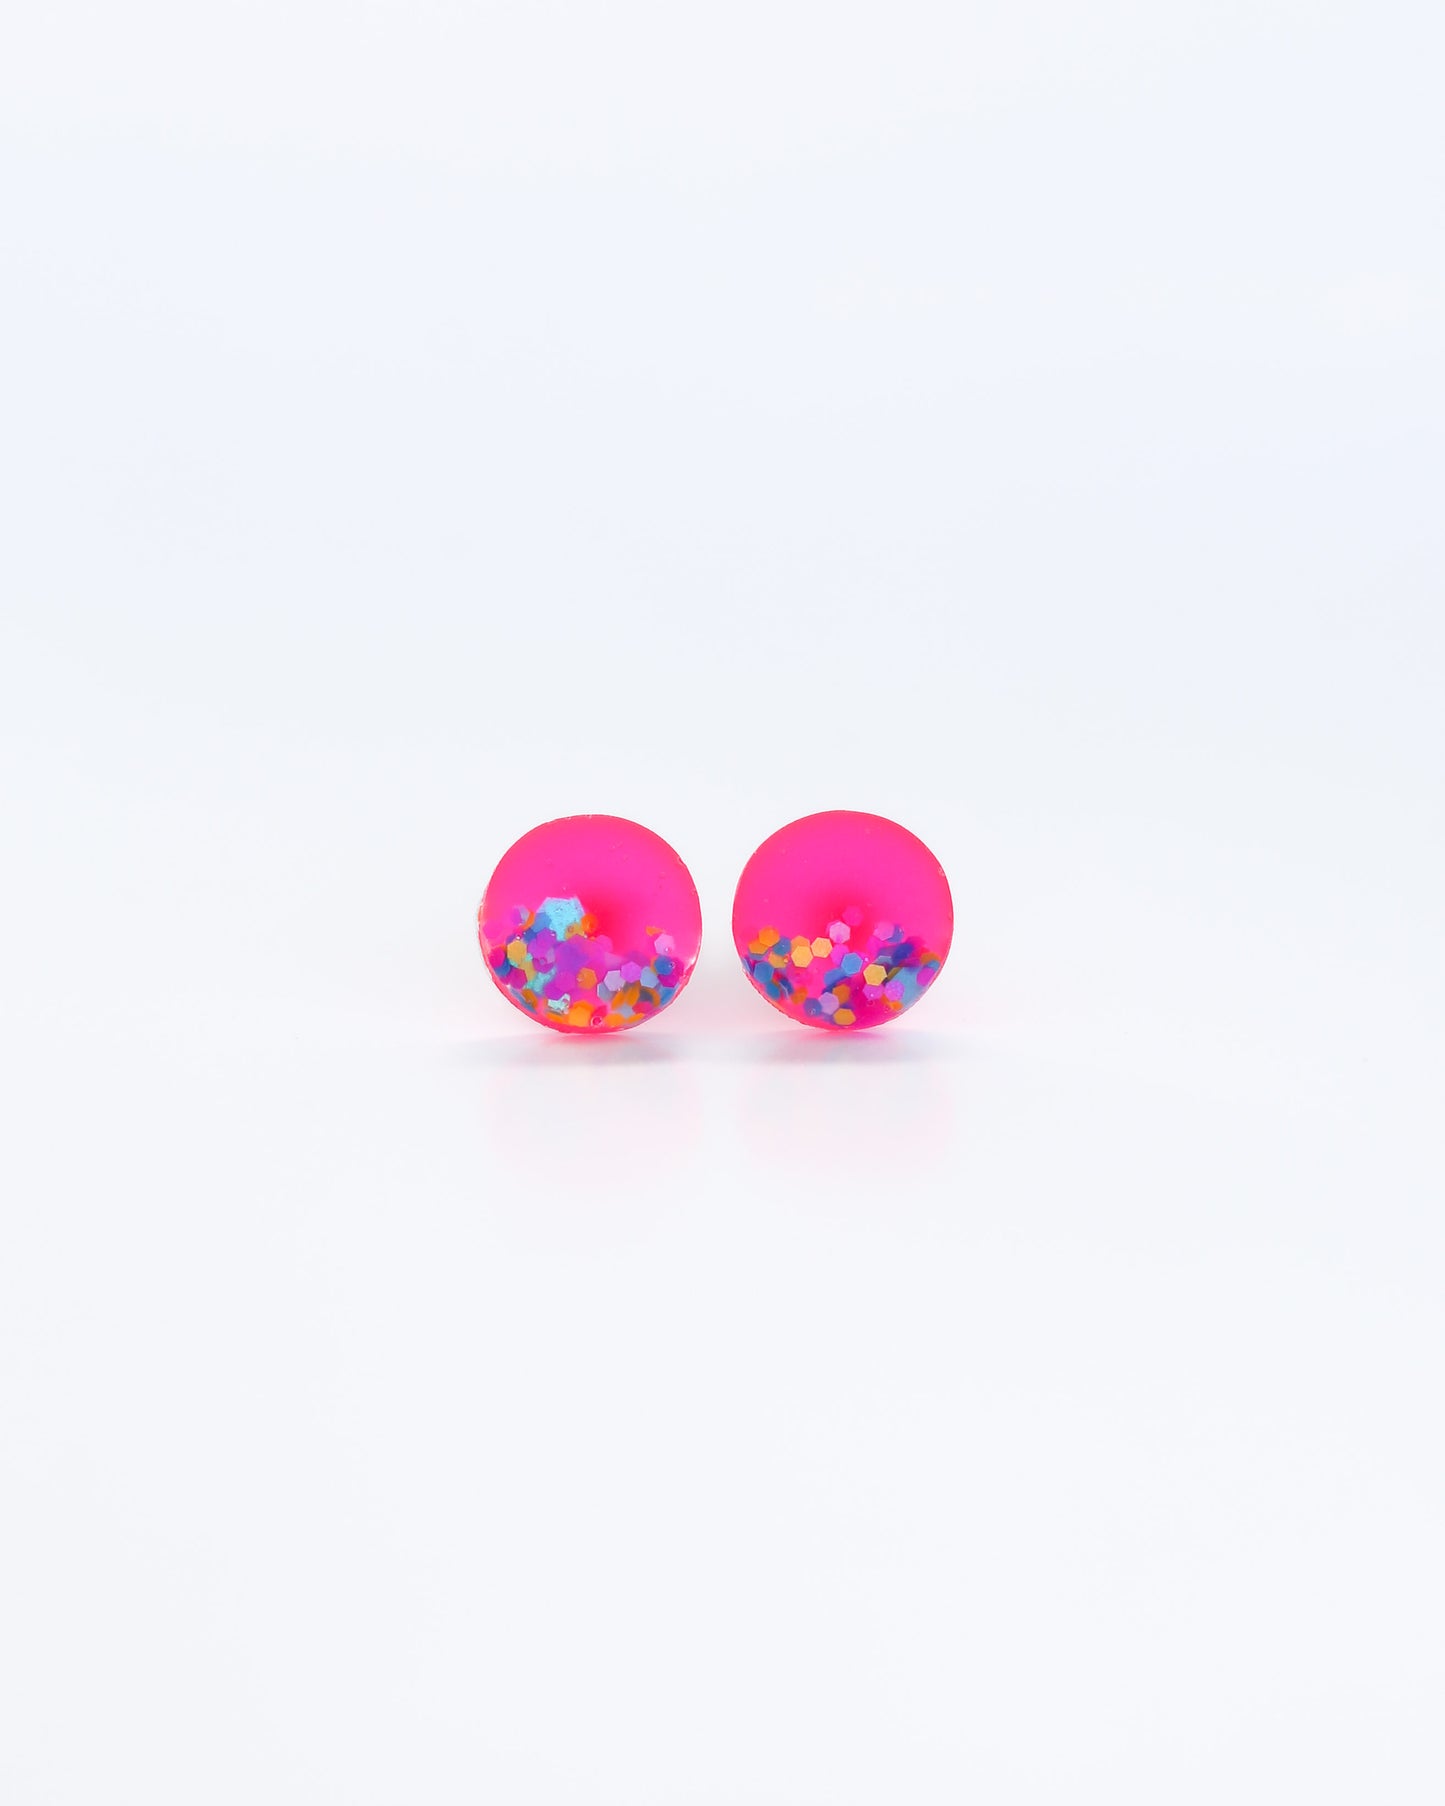 Neon pink surgical steel stud earrings, Hypoallergenic earrings for sensitive ears